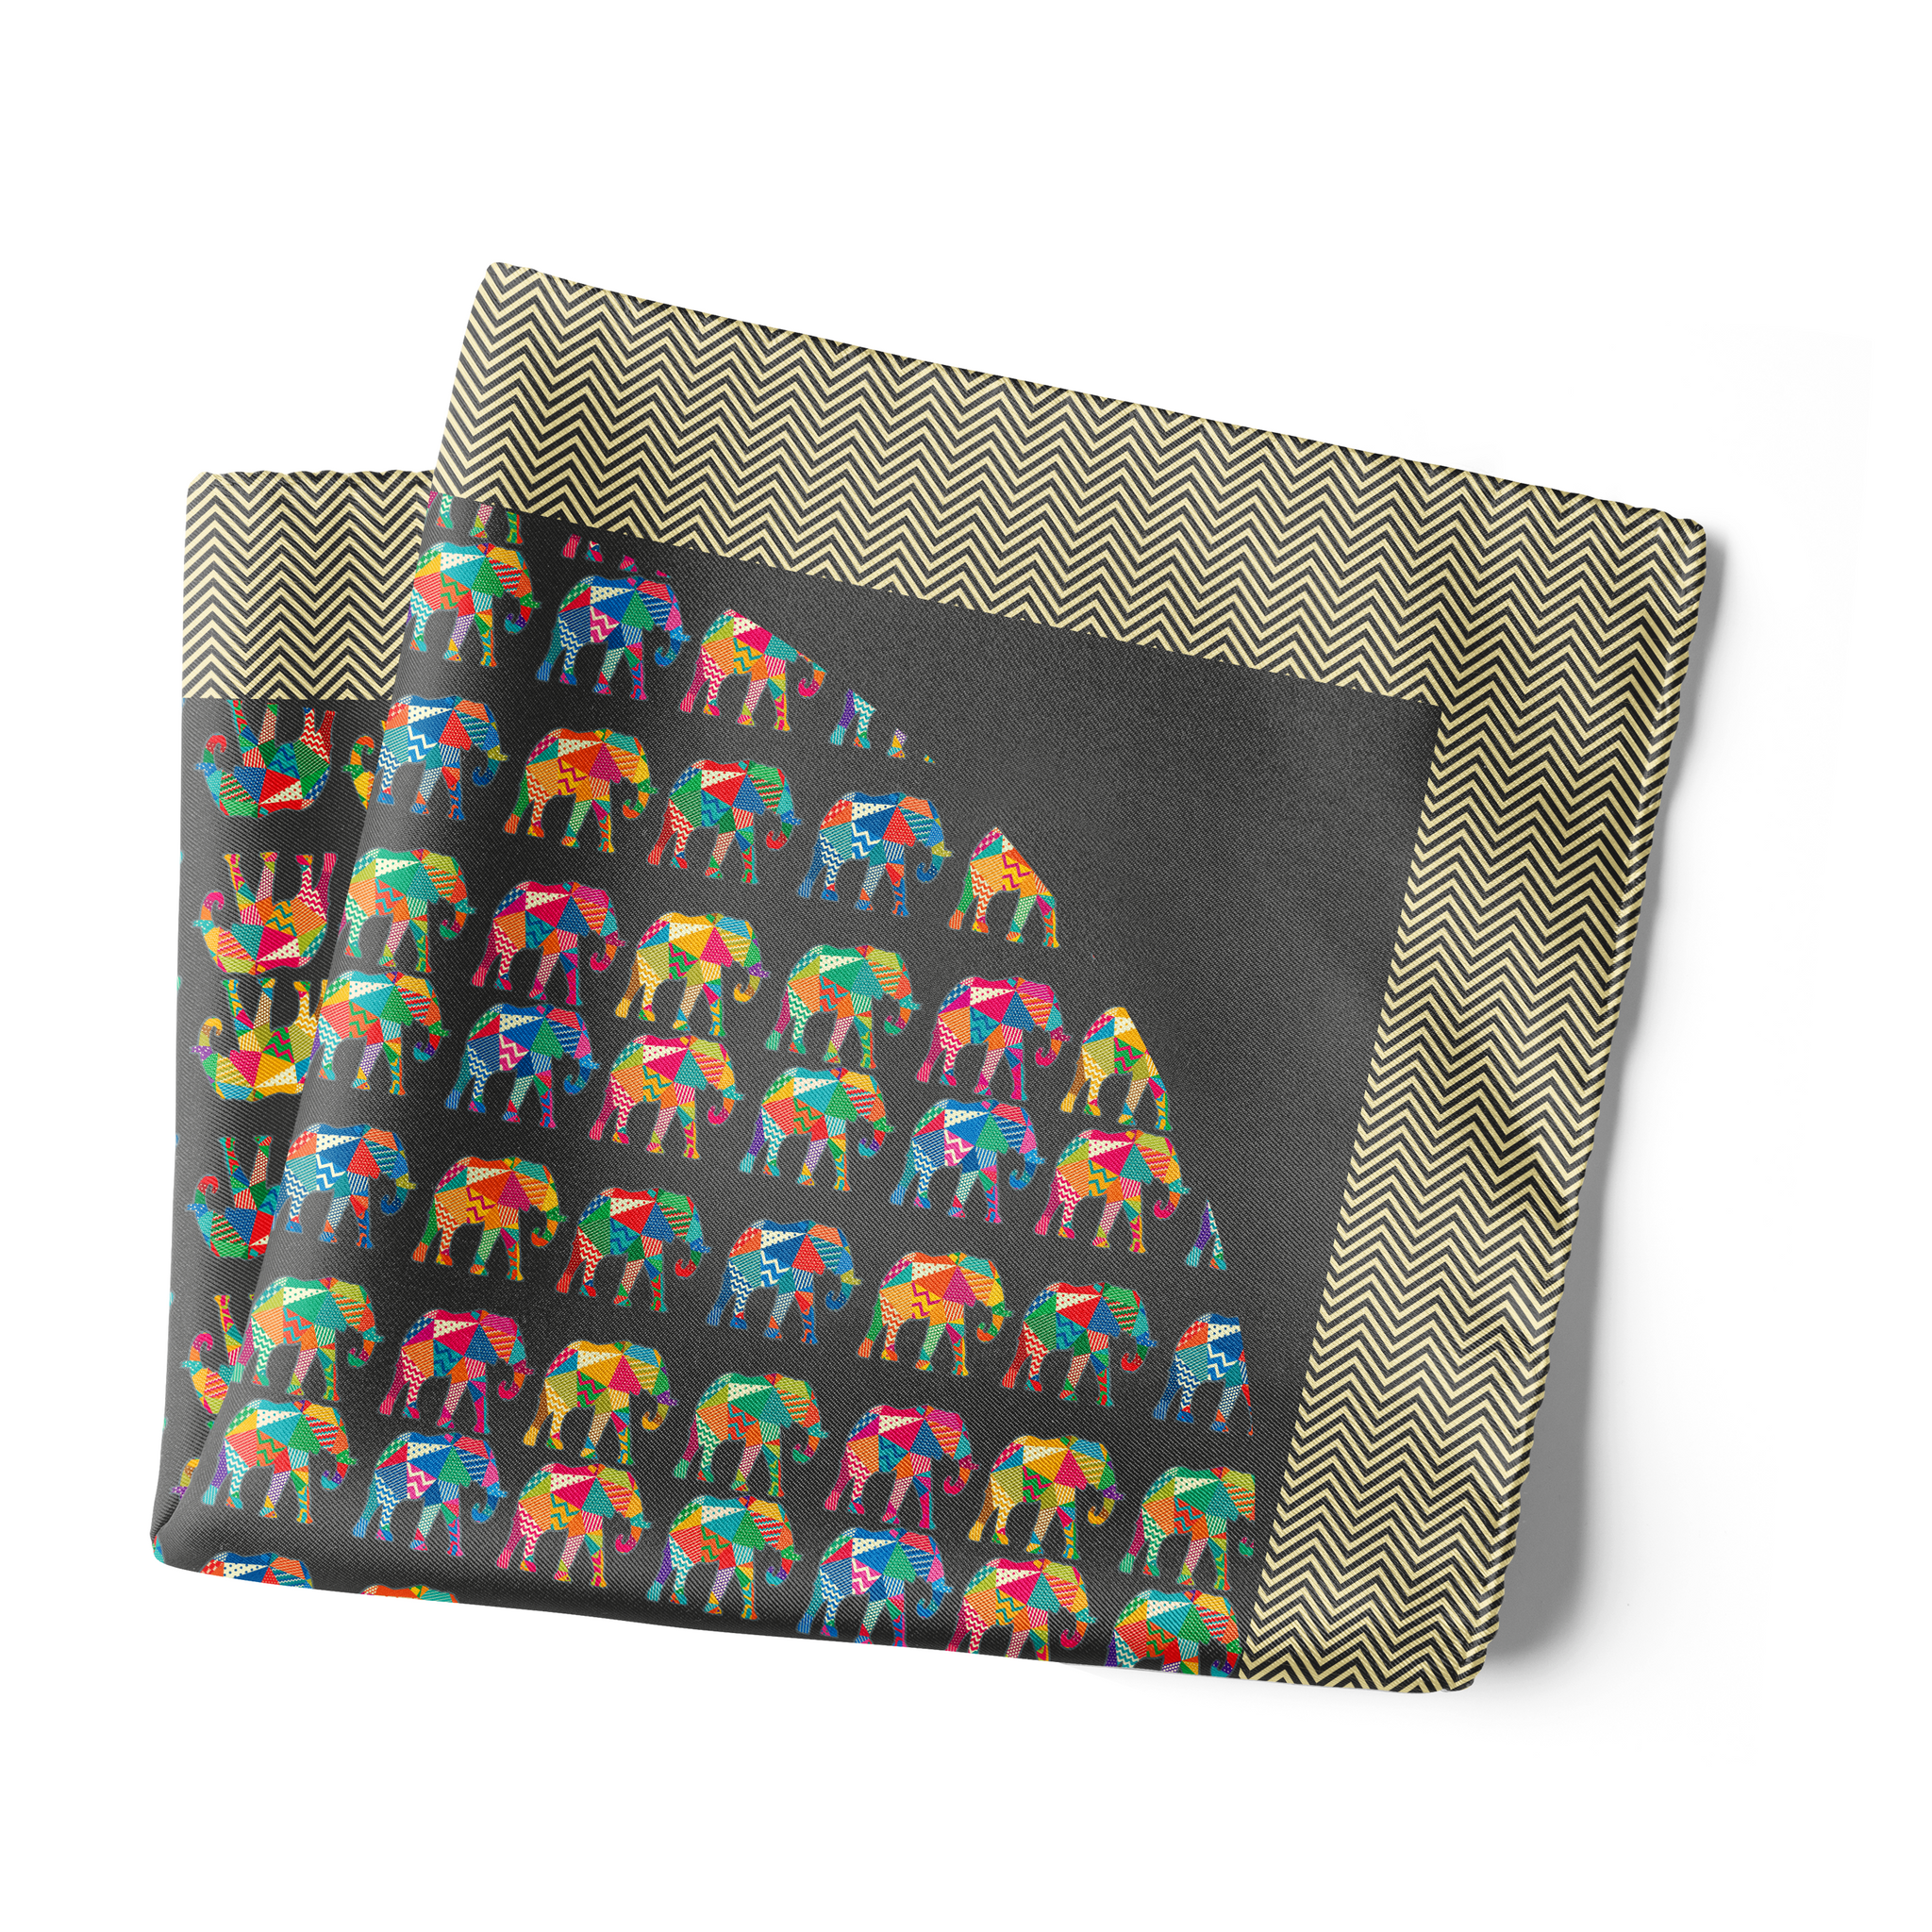 Chokore Multi-coloured Elephants Silk Pocket Square from the Wildlife range